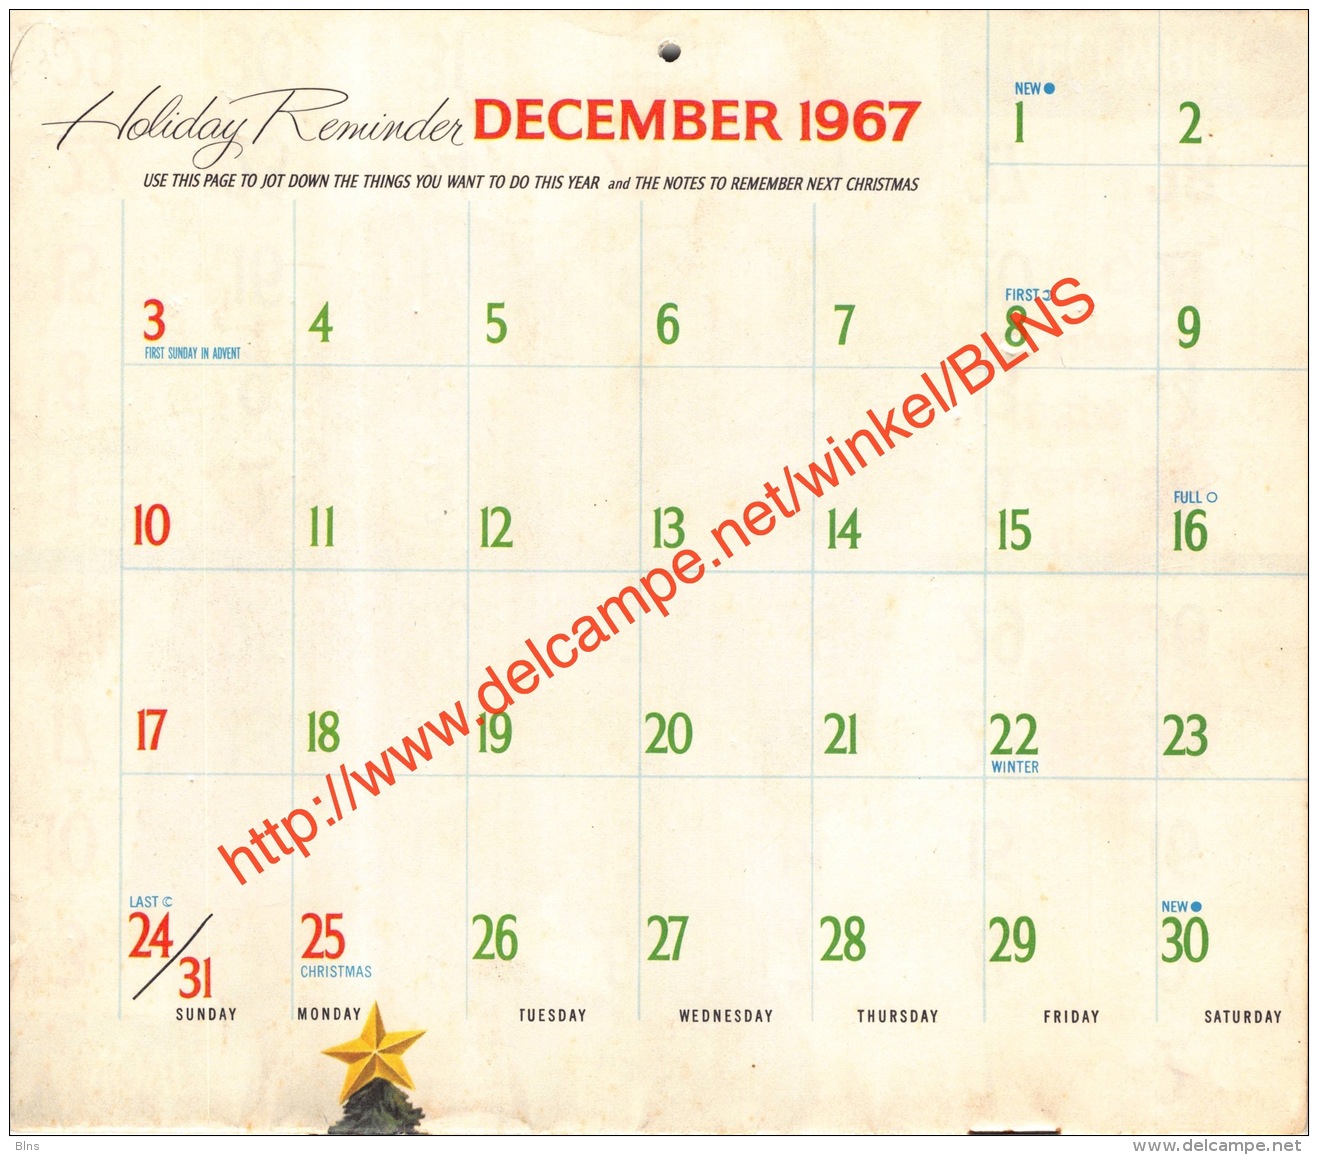 1968 Caldendar Coca-Cola - 18x15cm - 16 Pages - Calendars